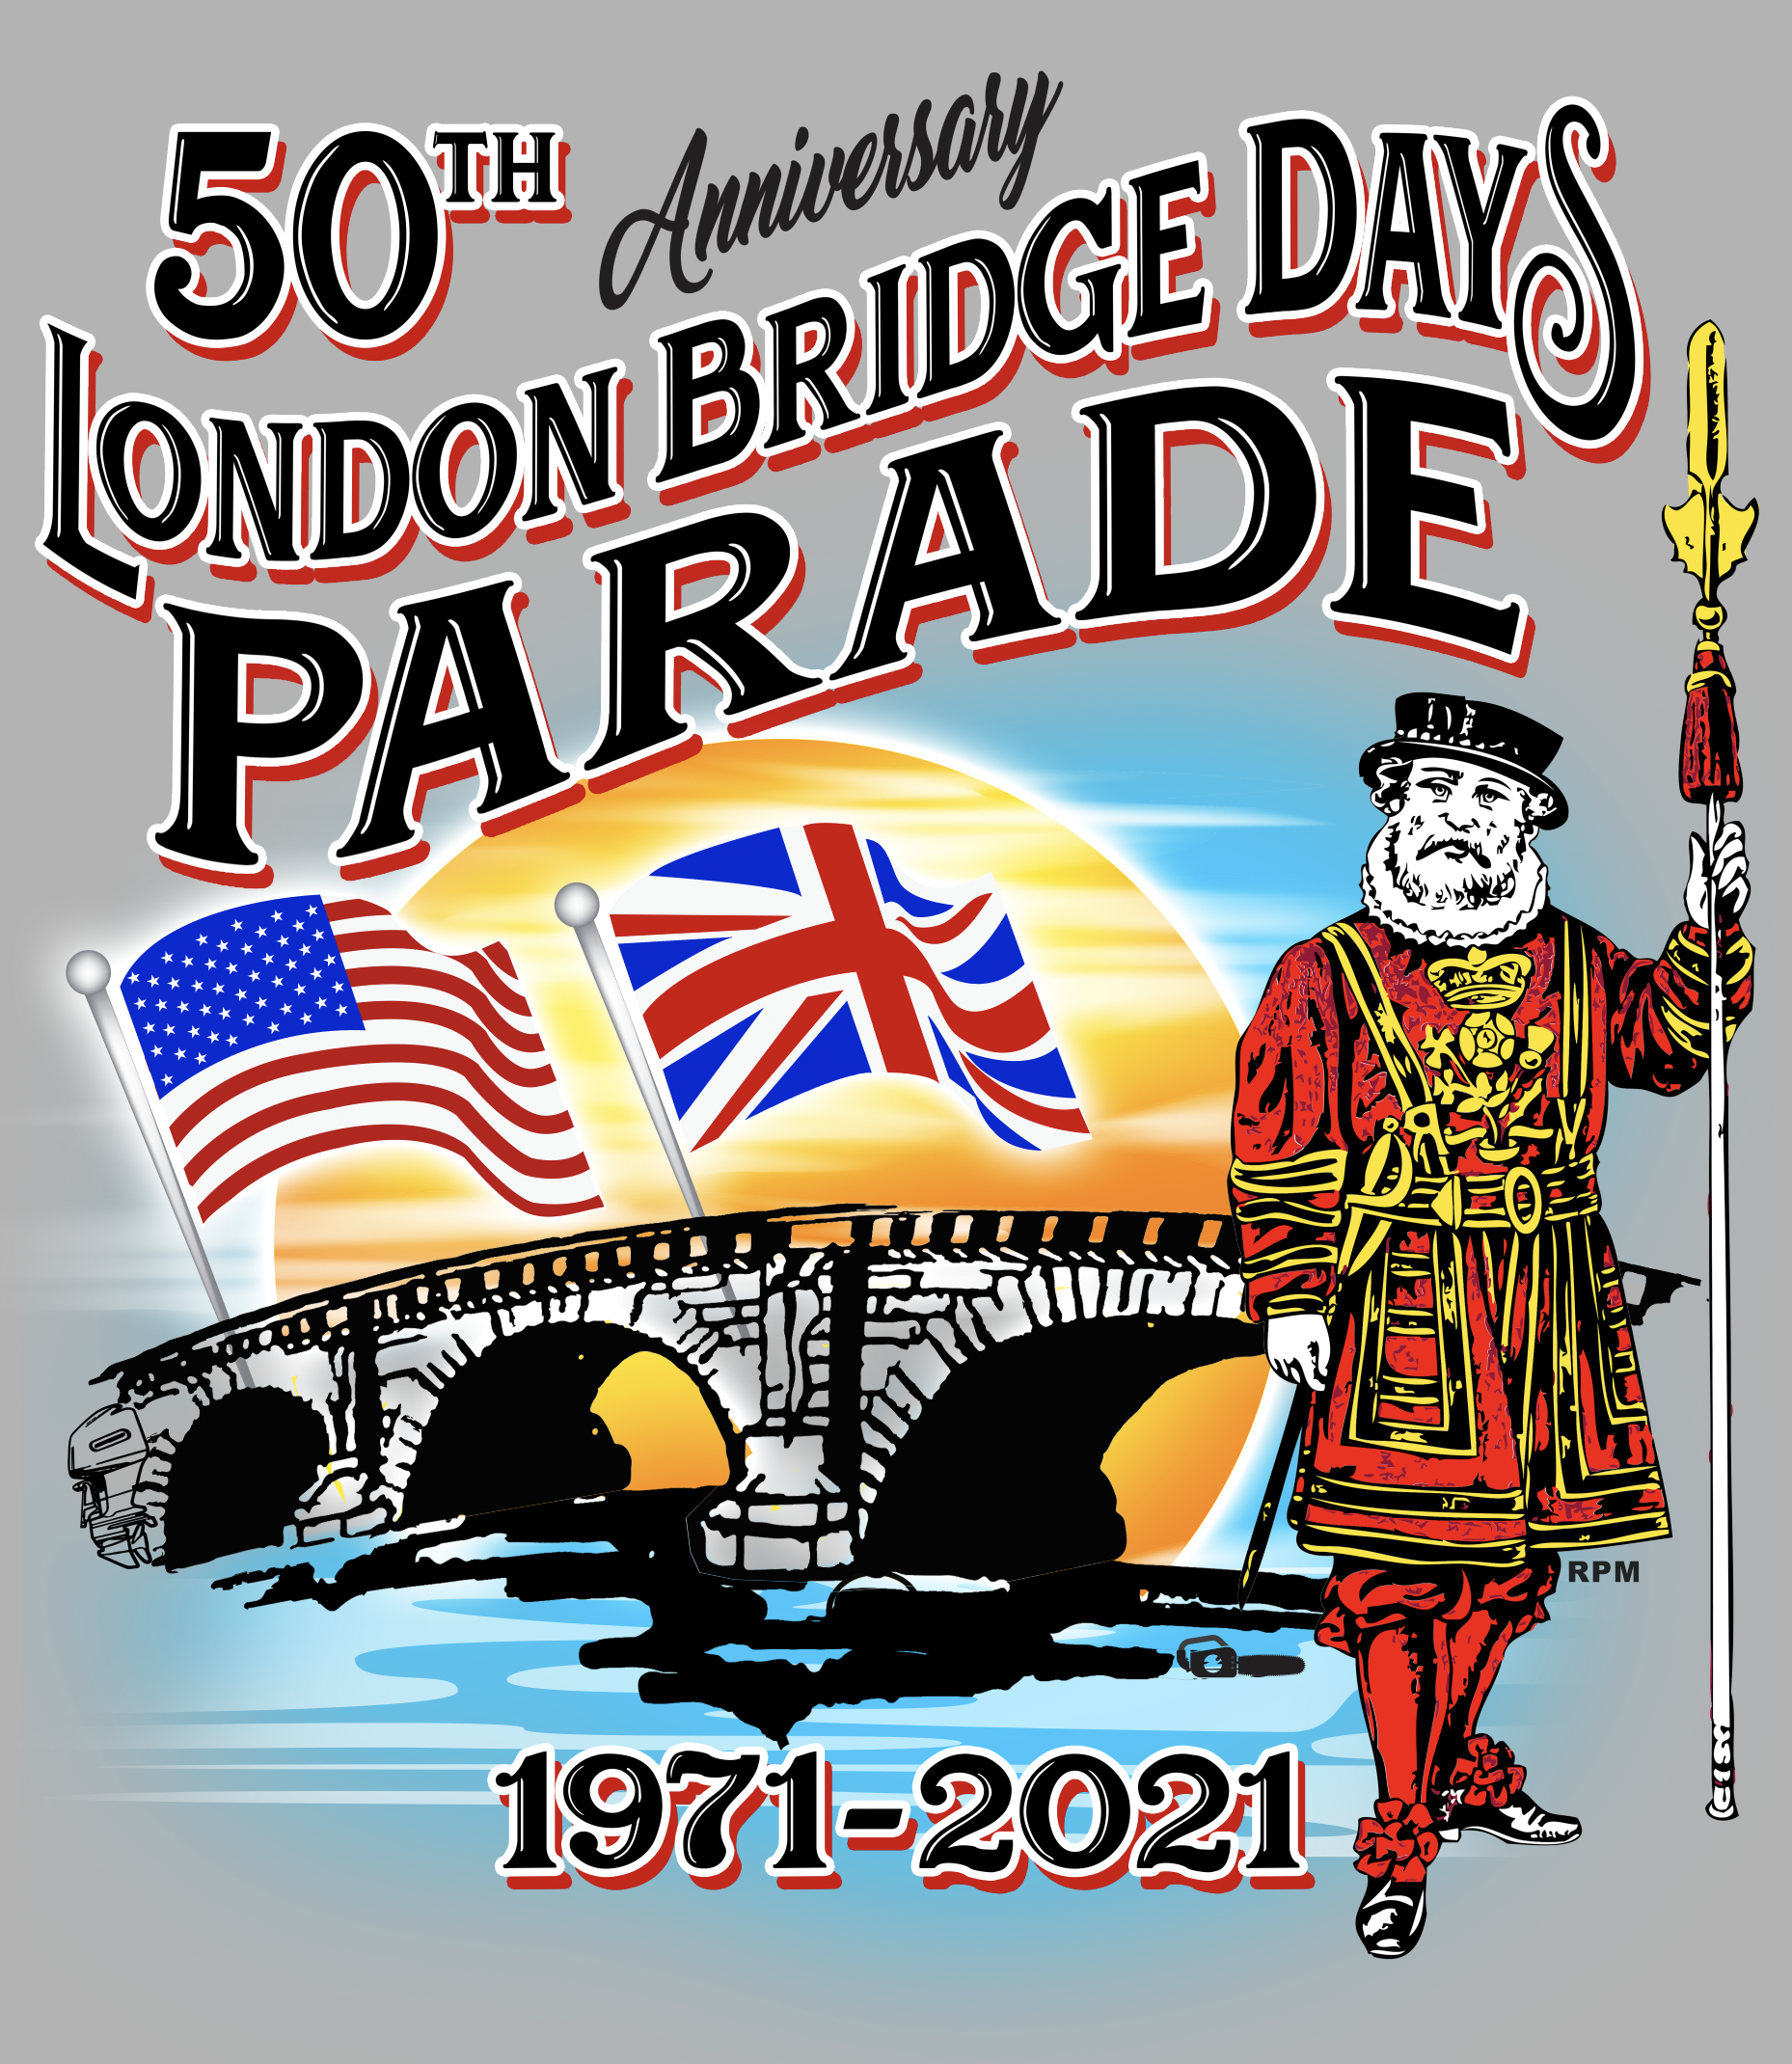 50th Anniversary London Bridge Days Parade T-Shirts Available